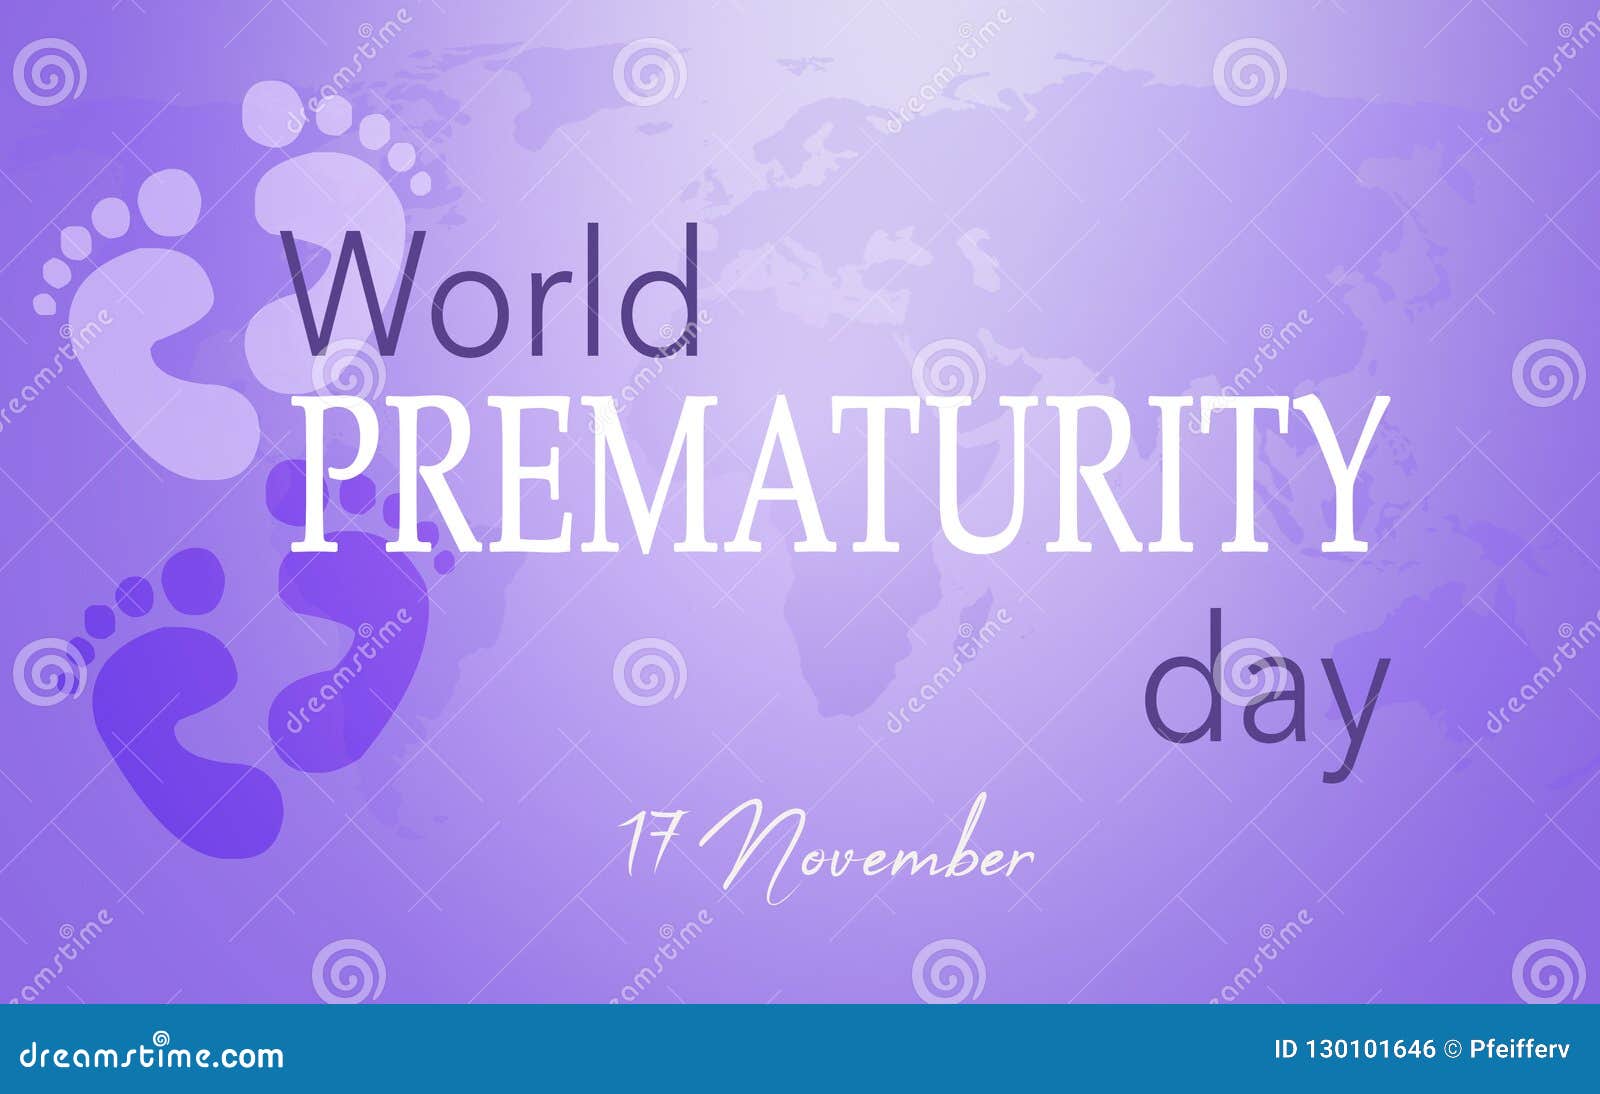 world prematurity day